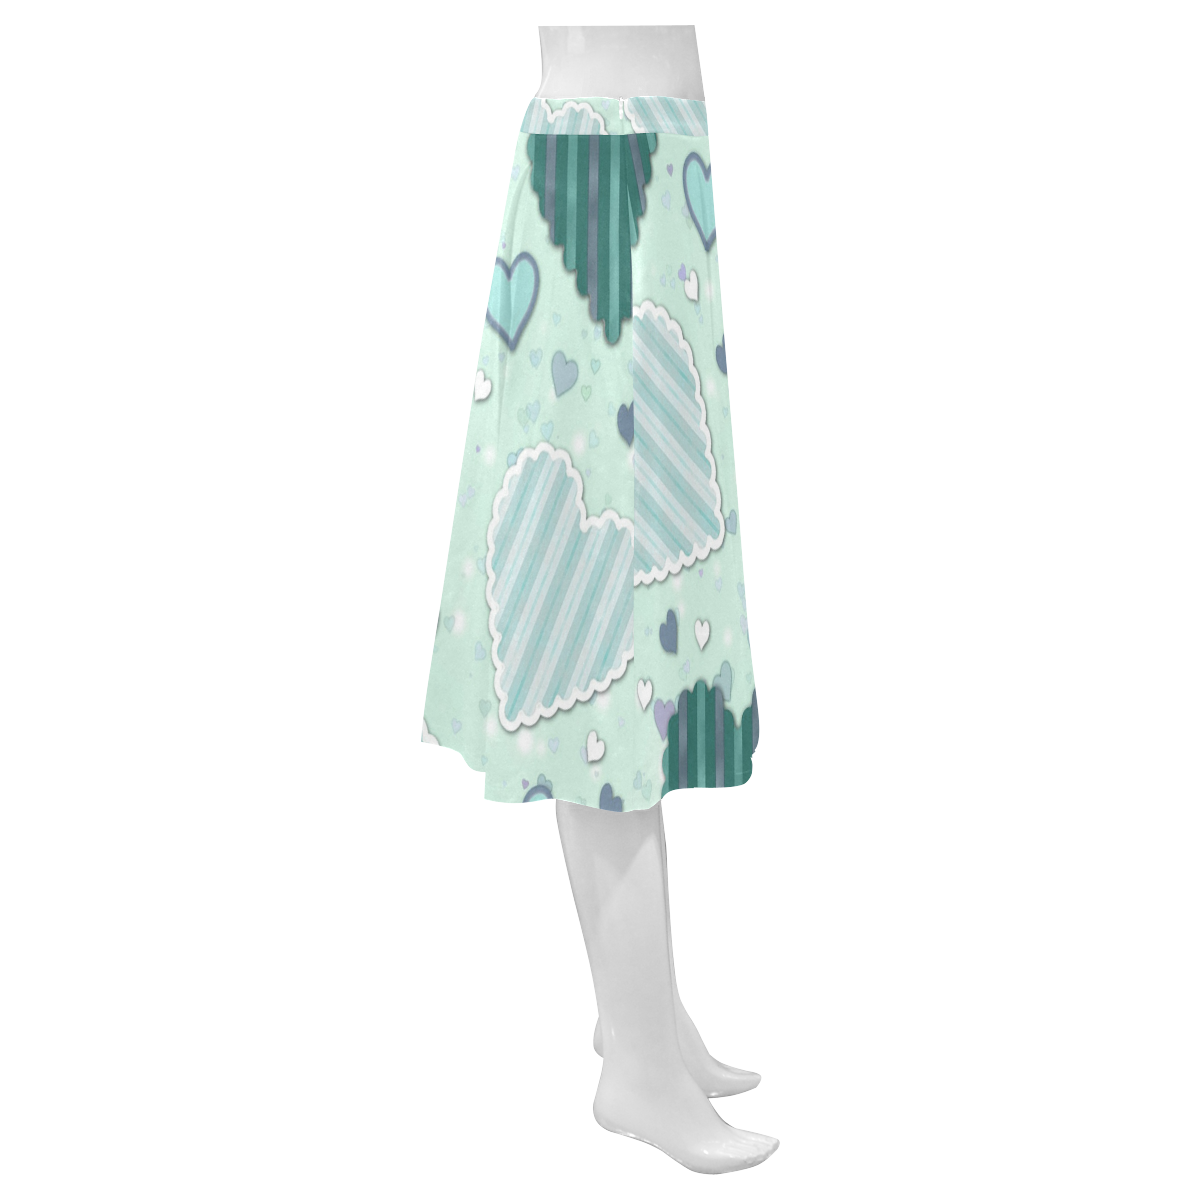 Mint Green Patchwork Hearts Mnemosyne Women's Crepe Skirt (Model D16)